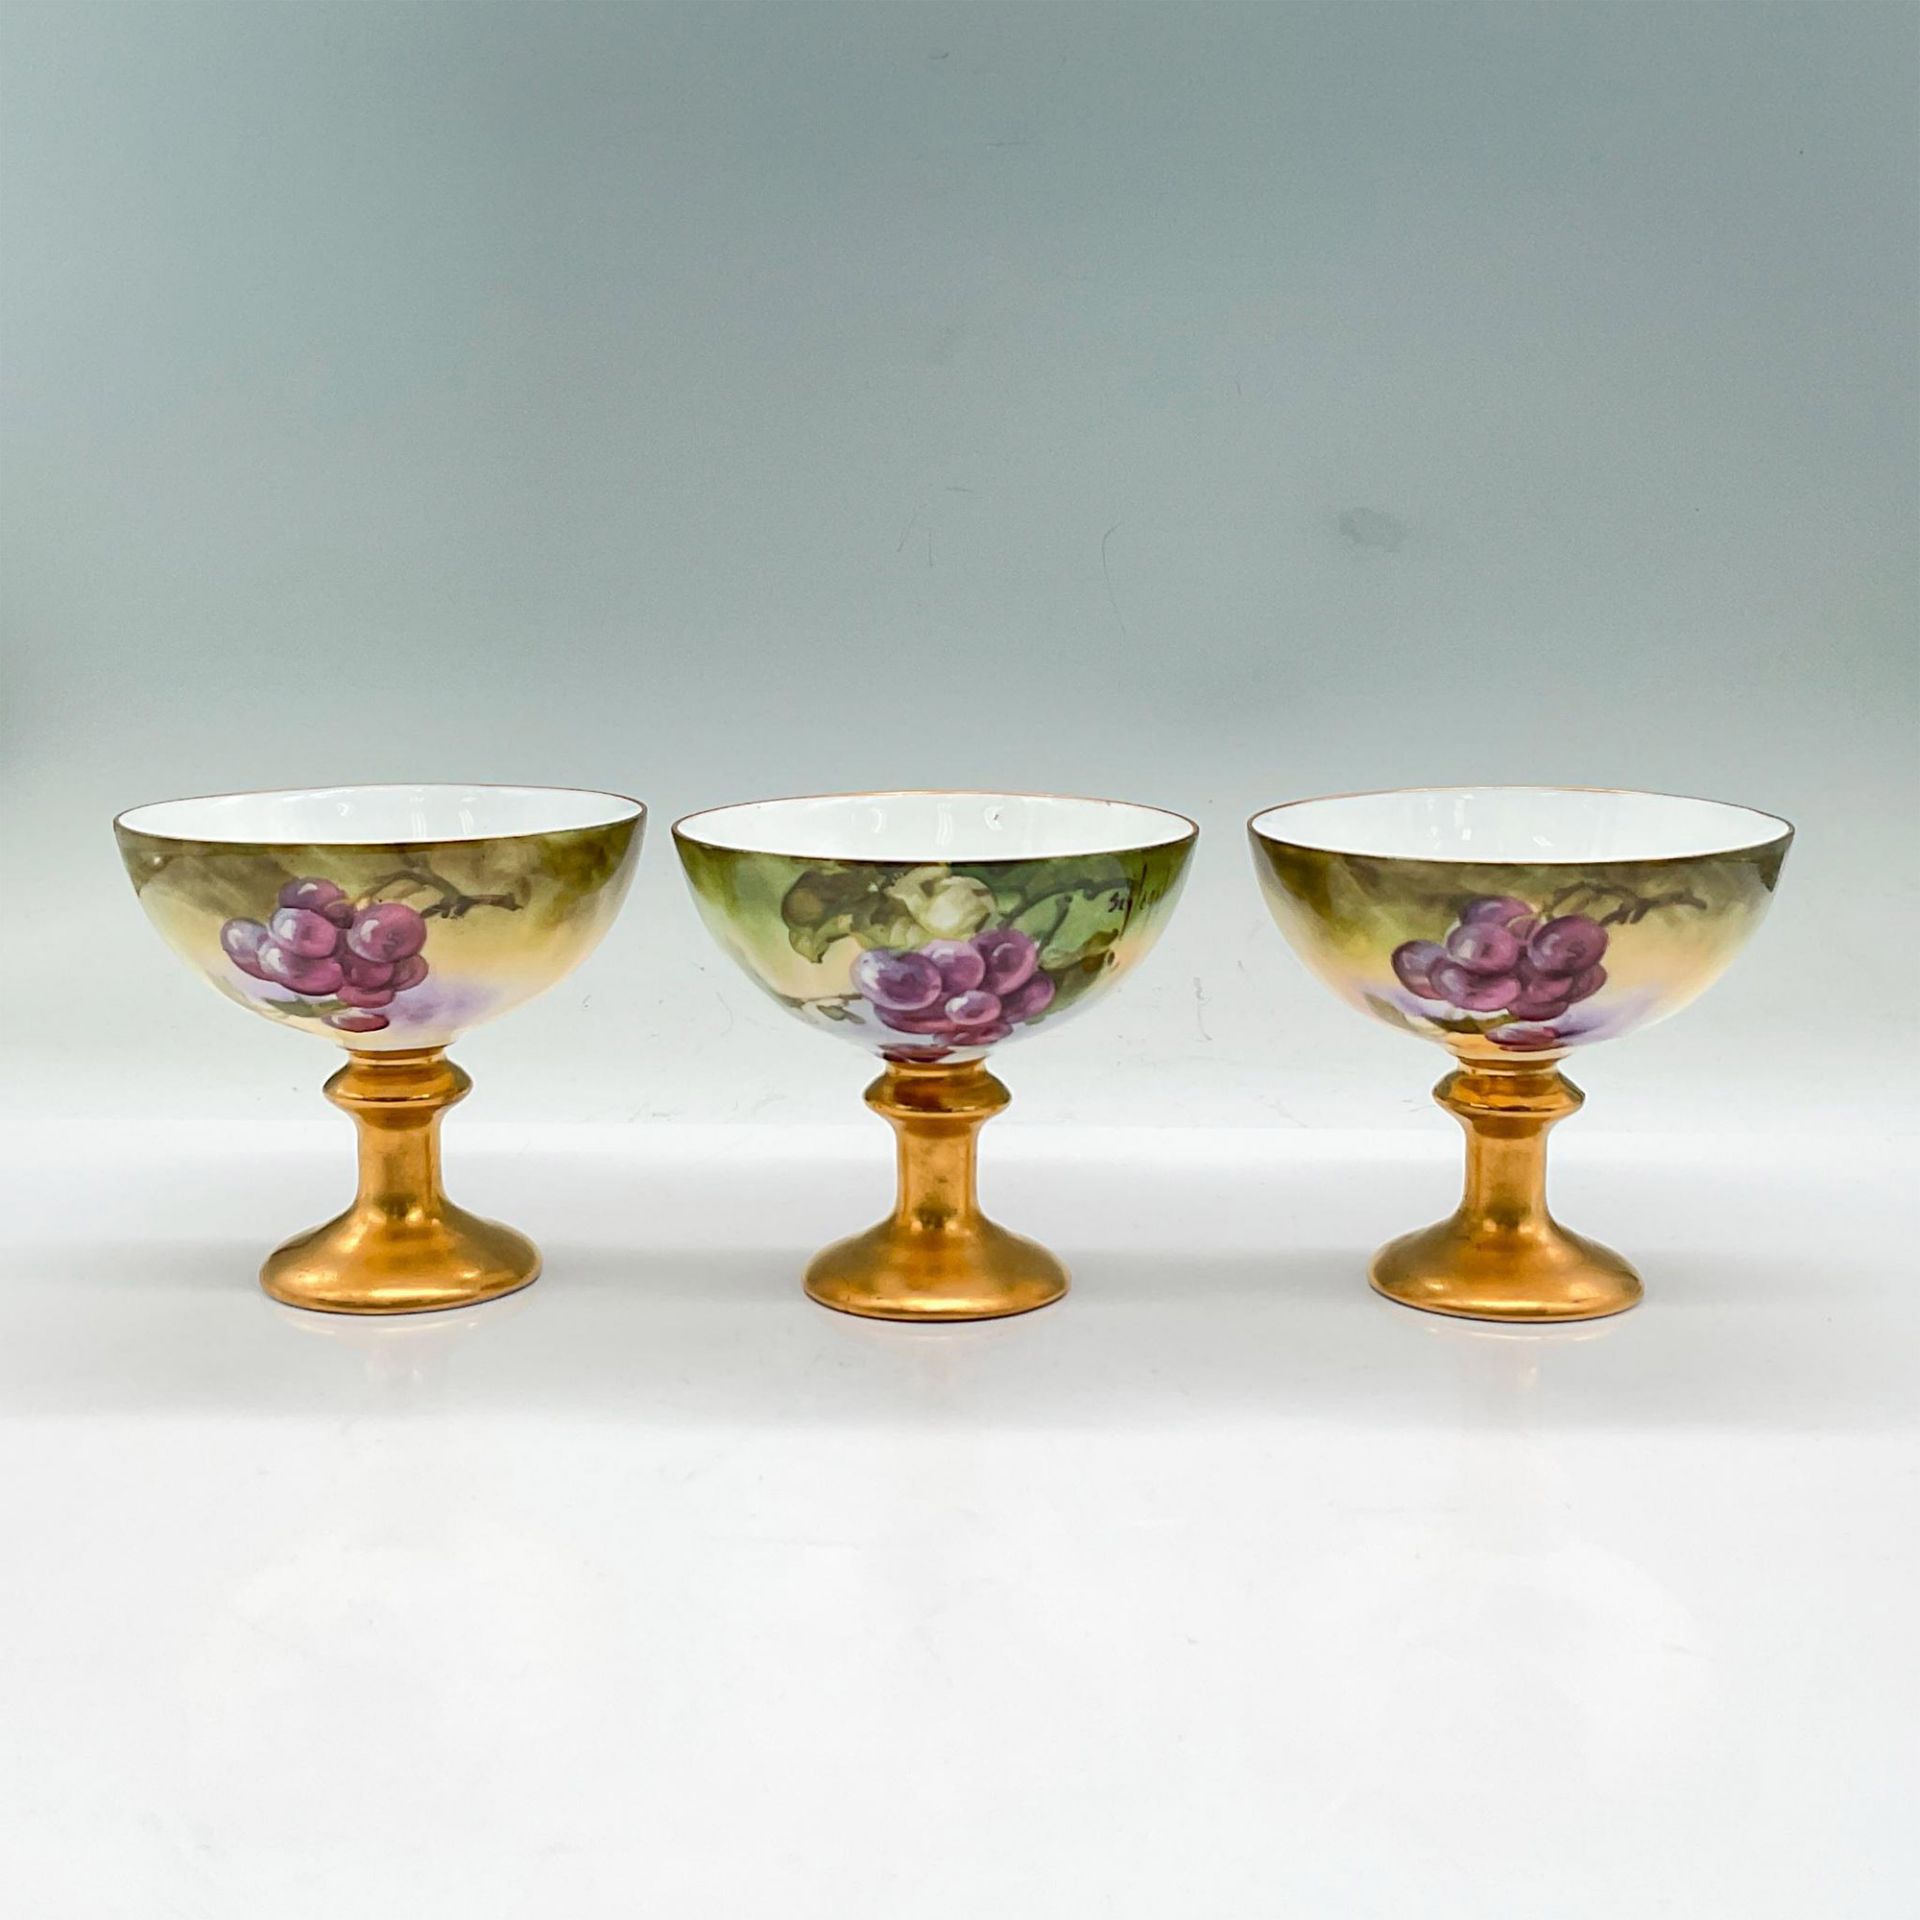 P&P Limoges Porcelain Pitcher, Grapes - Image 5 of 7